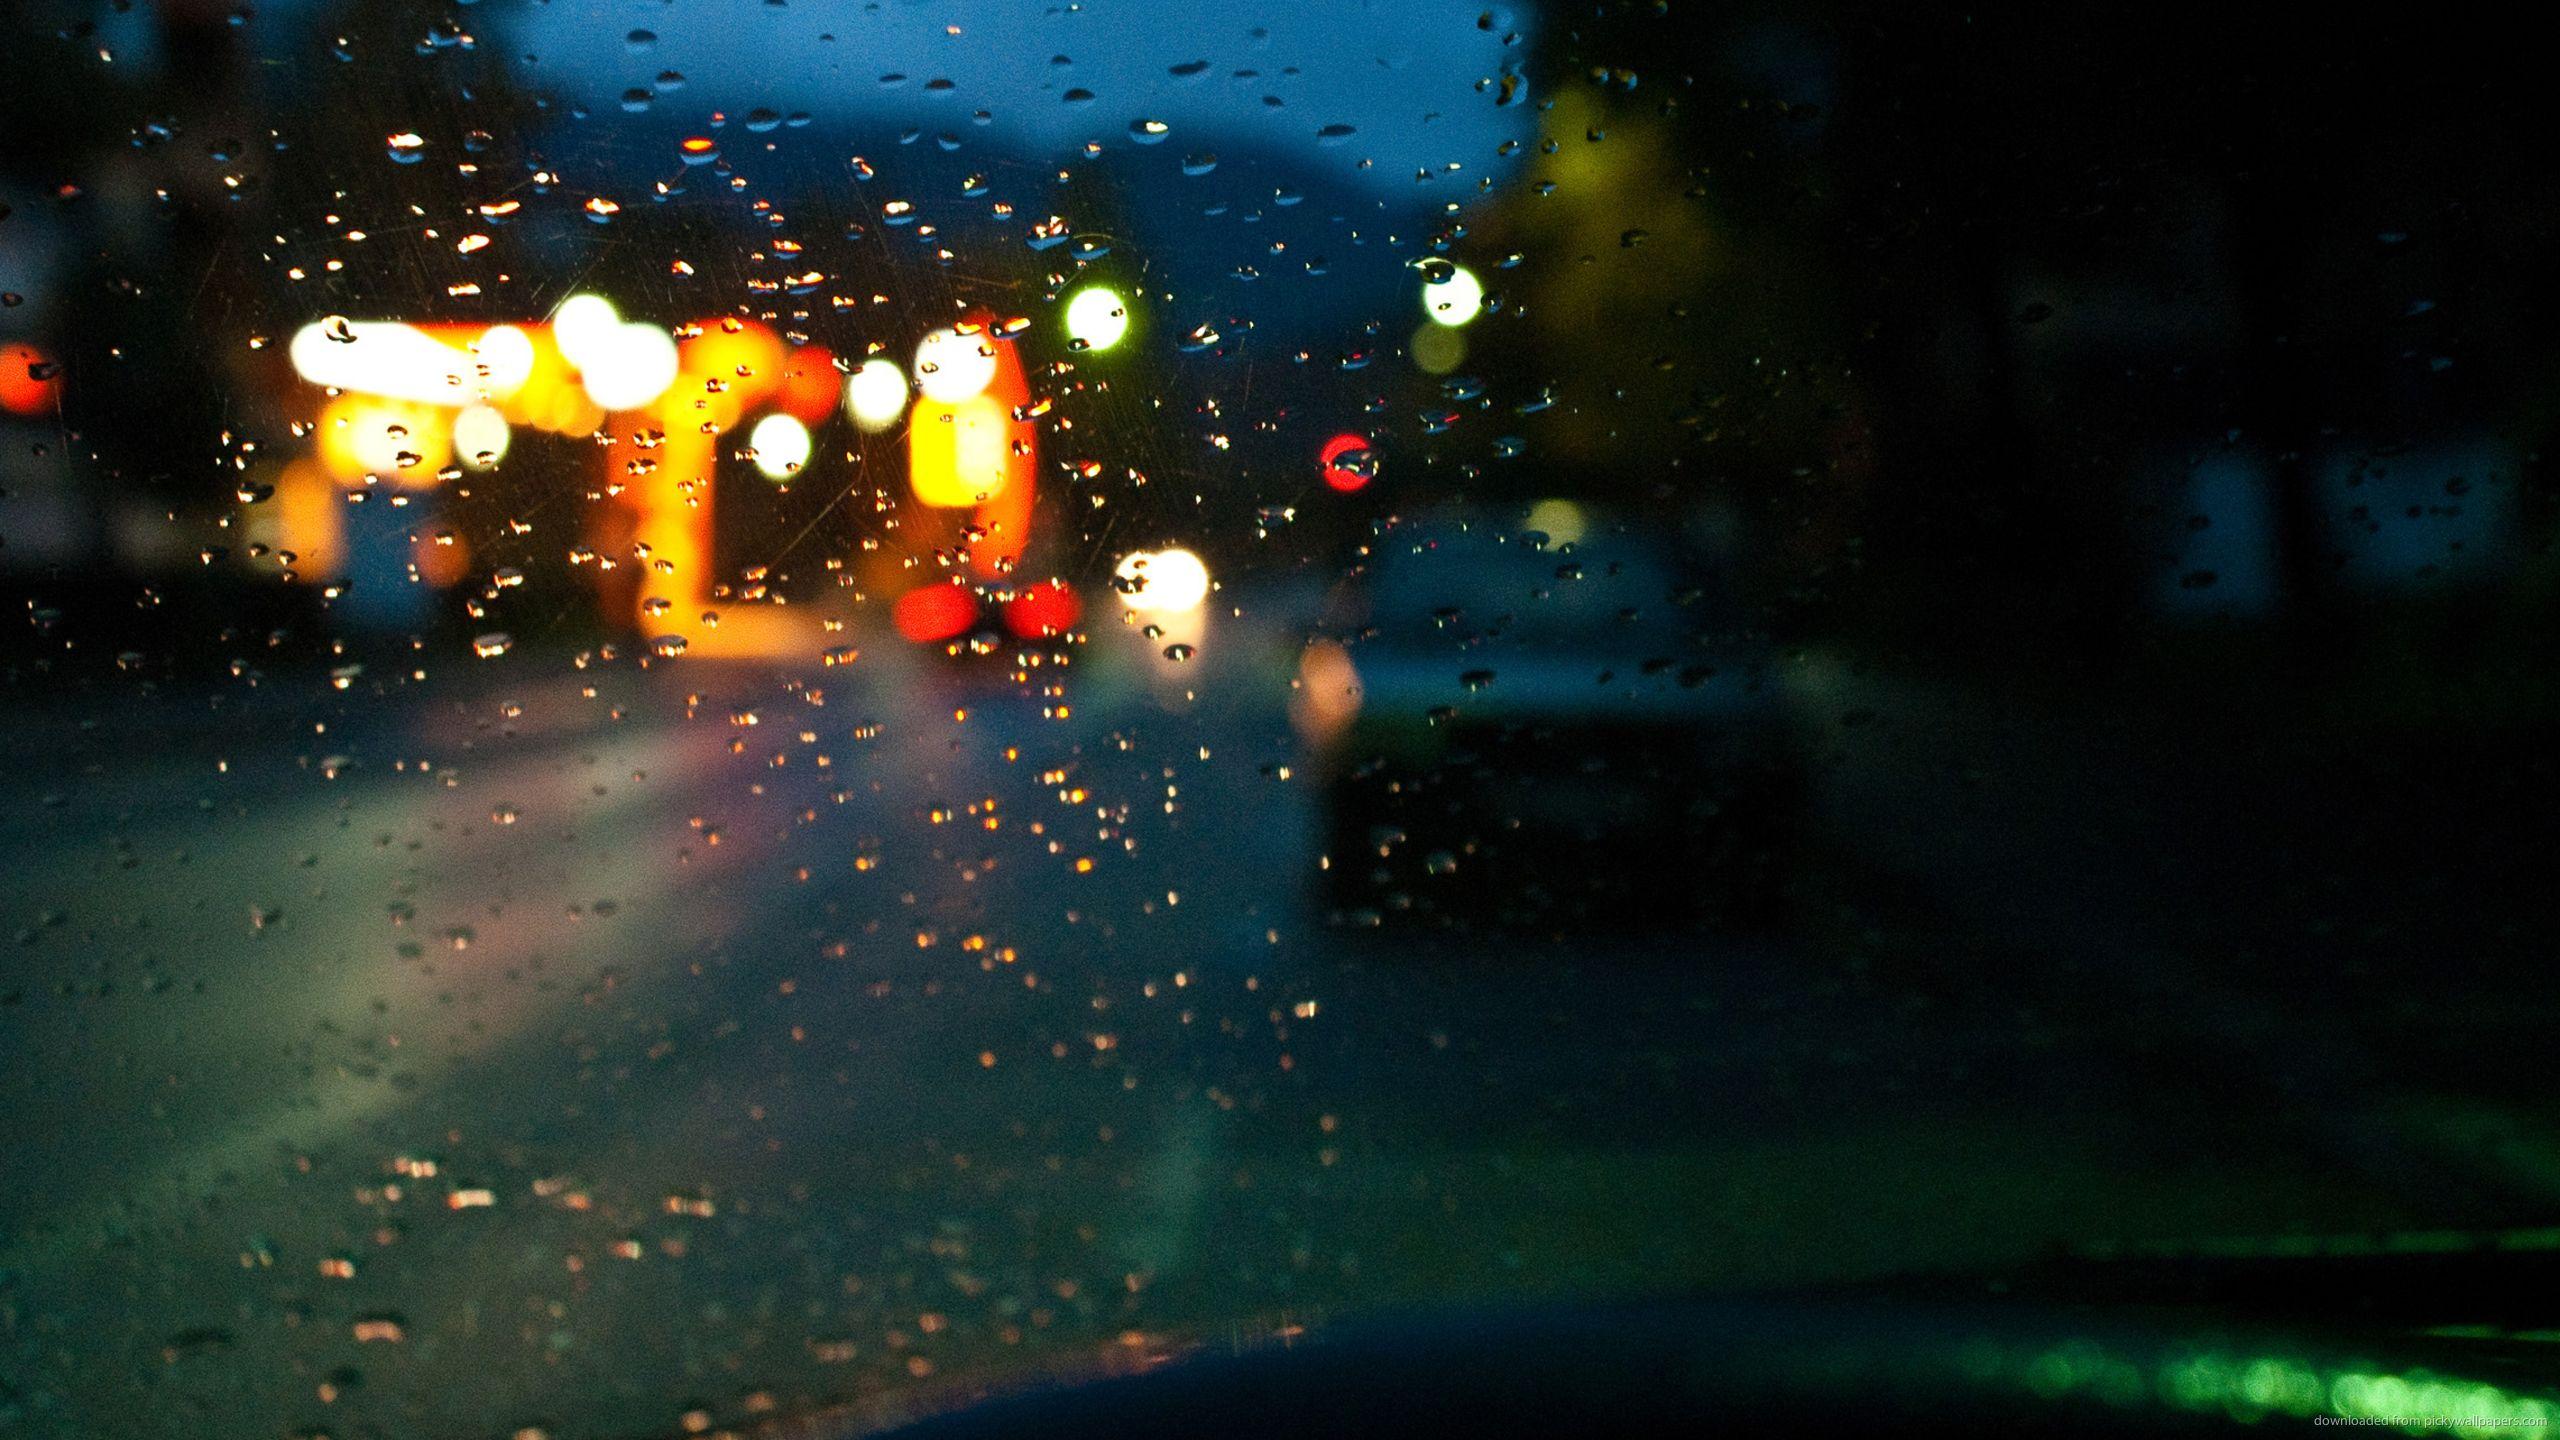 Download 2560x1440 Driving In The Rain Wallpaper